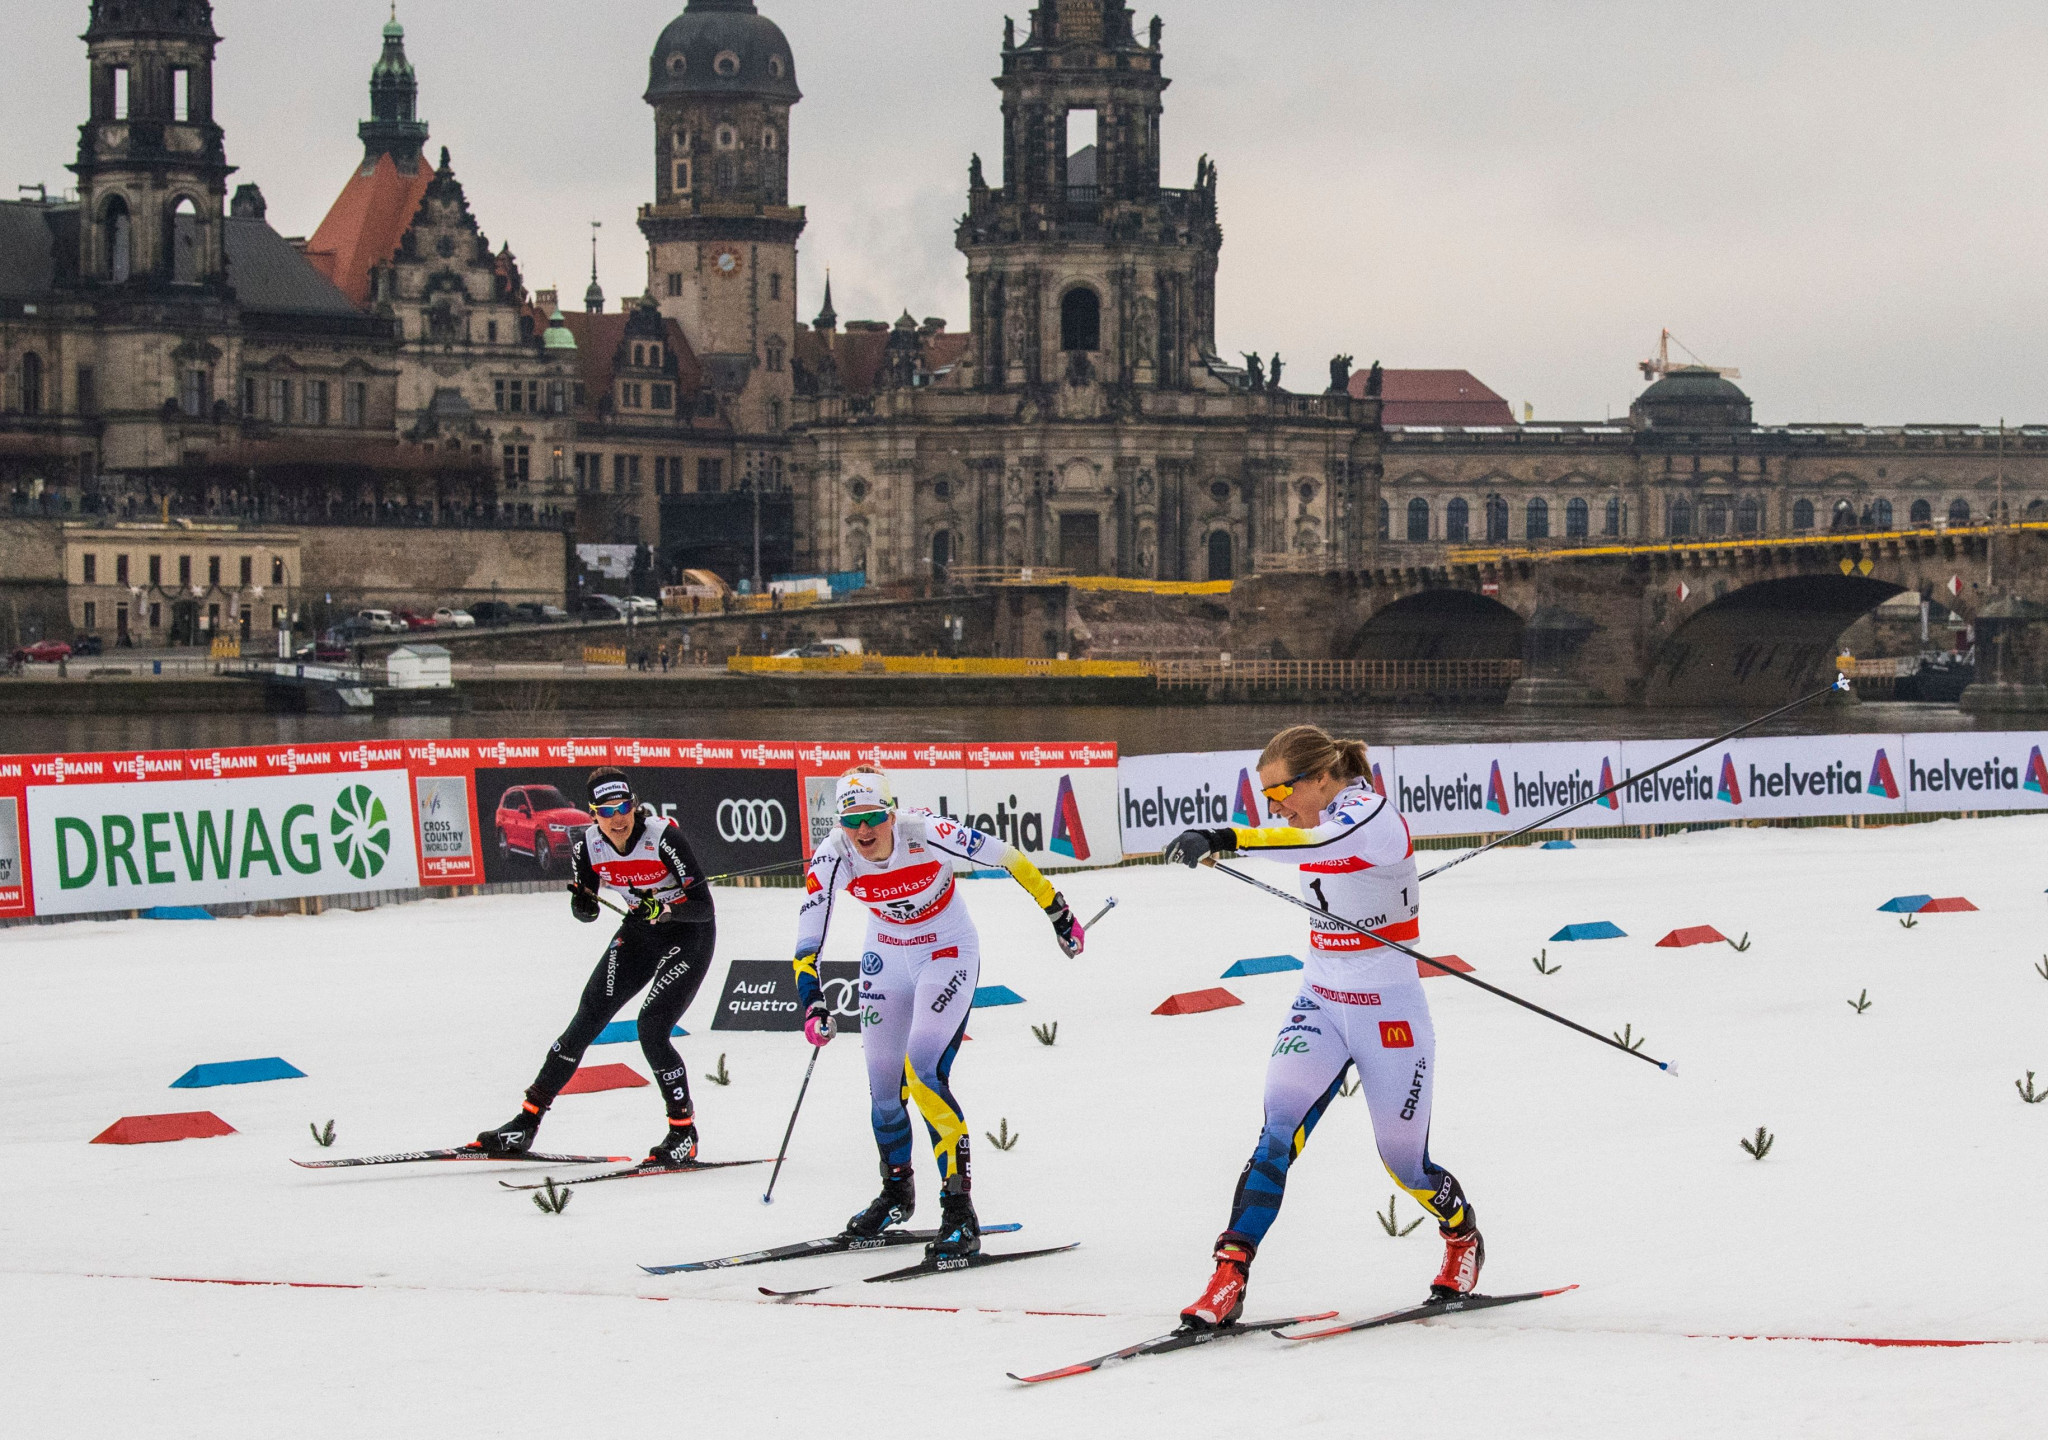 Maja Dahlqvist helped Sweden win the women's race ©Getty Images